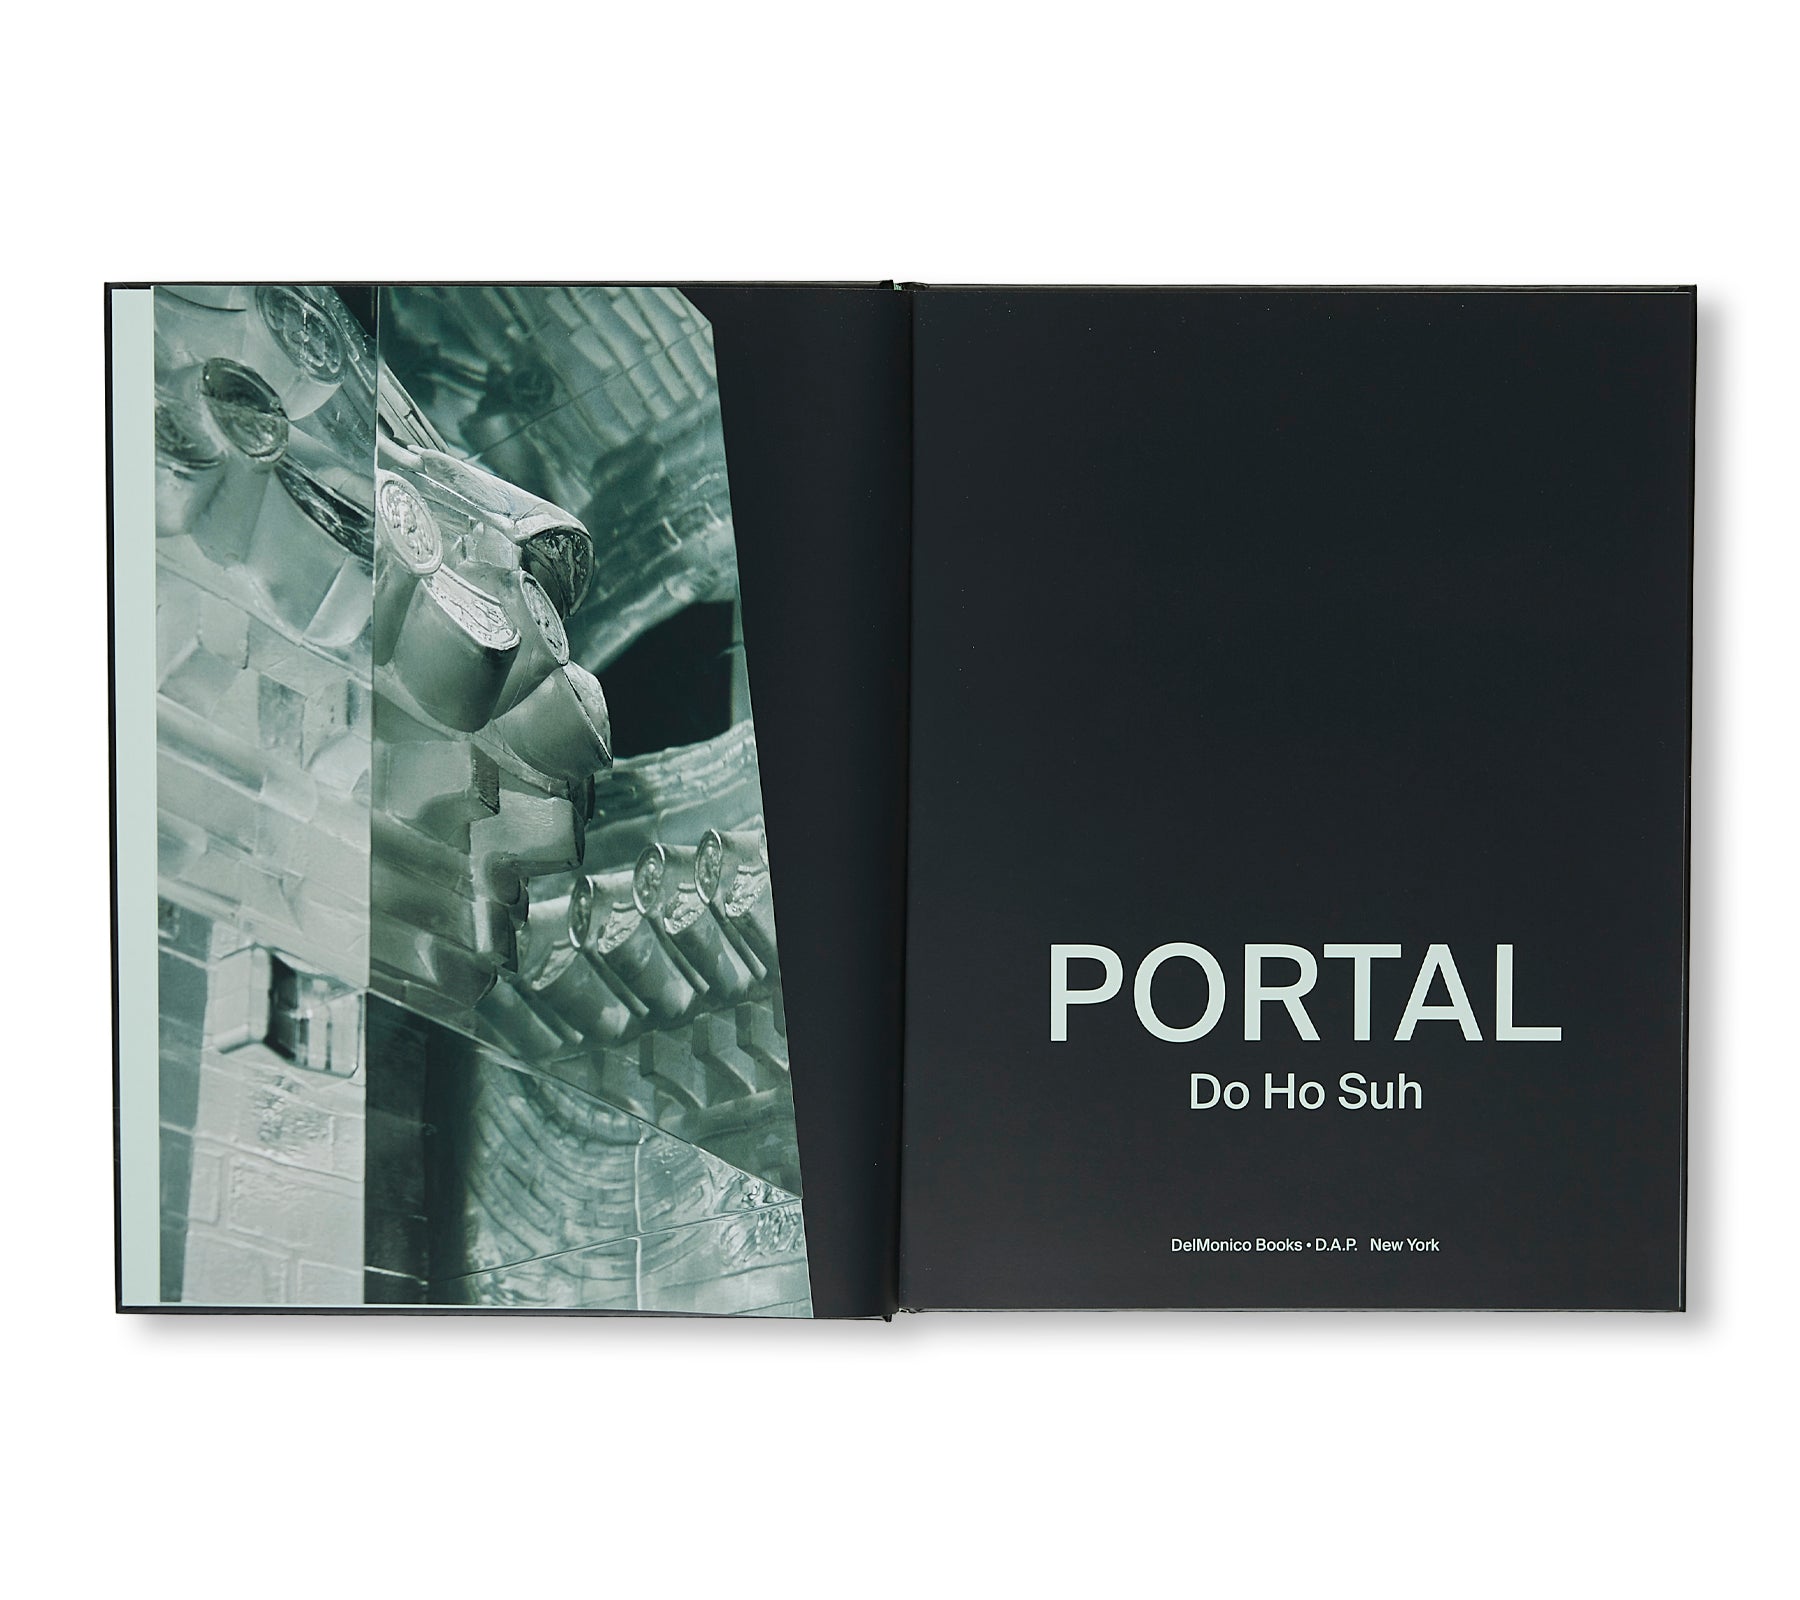 PORTAL by Do Ho Suh – twelvebooks